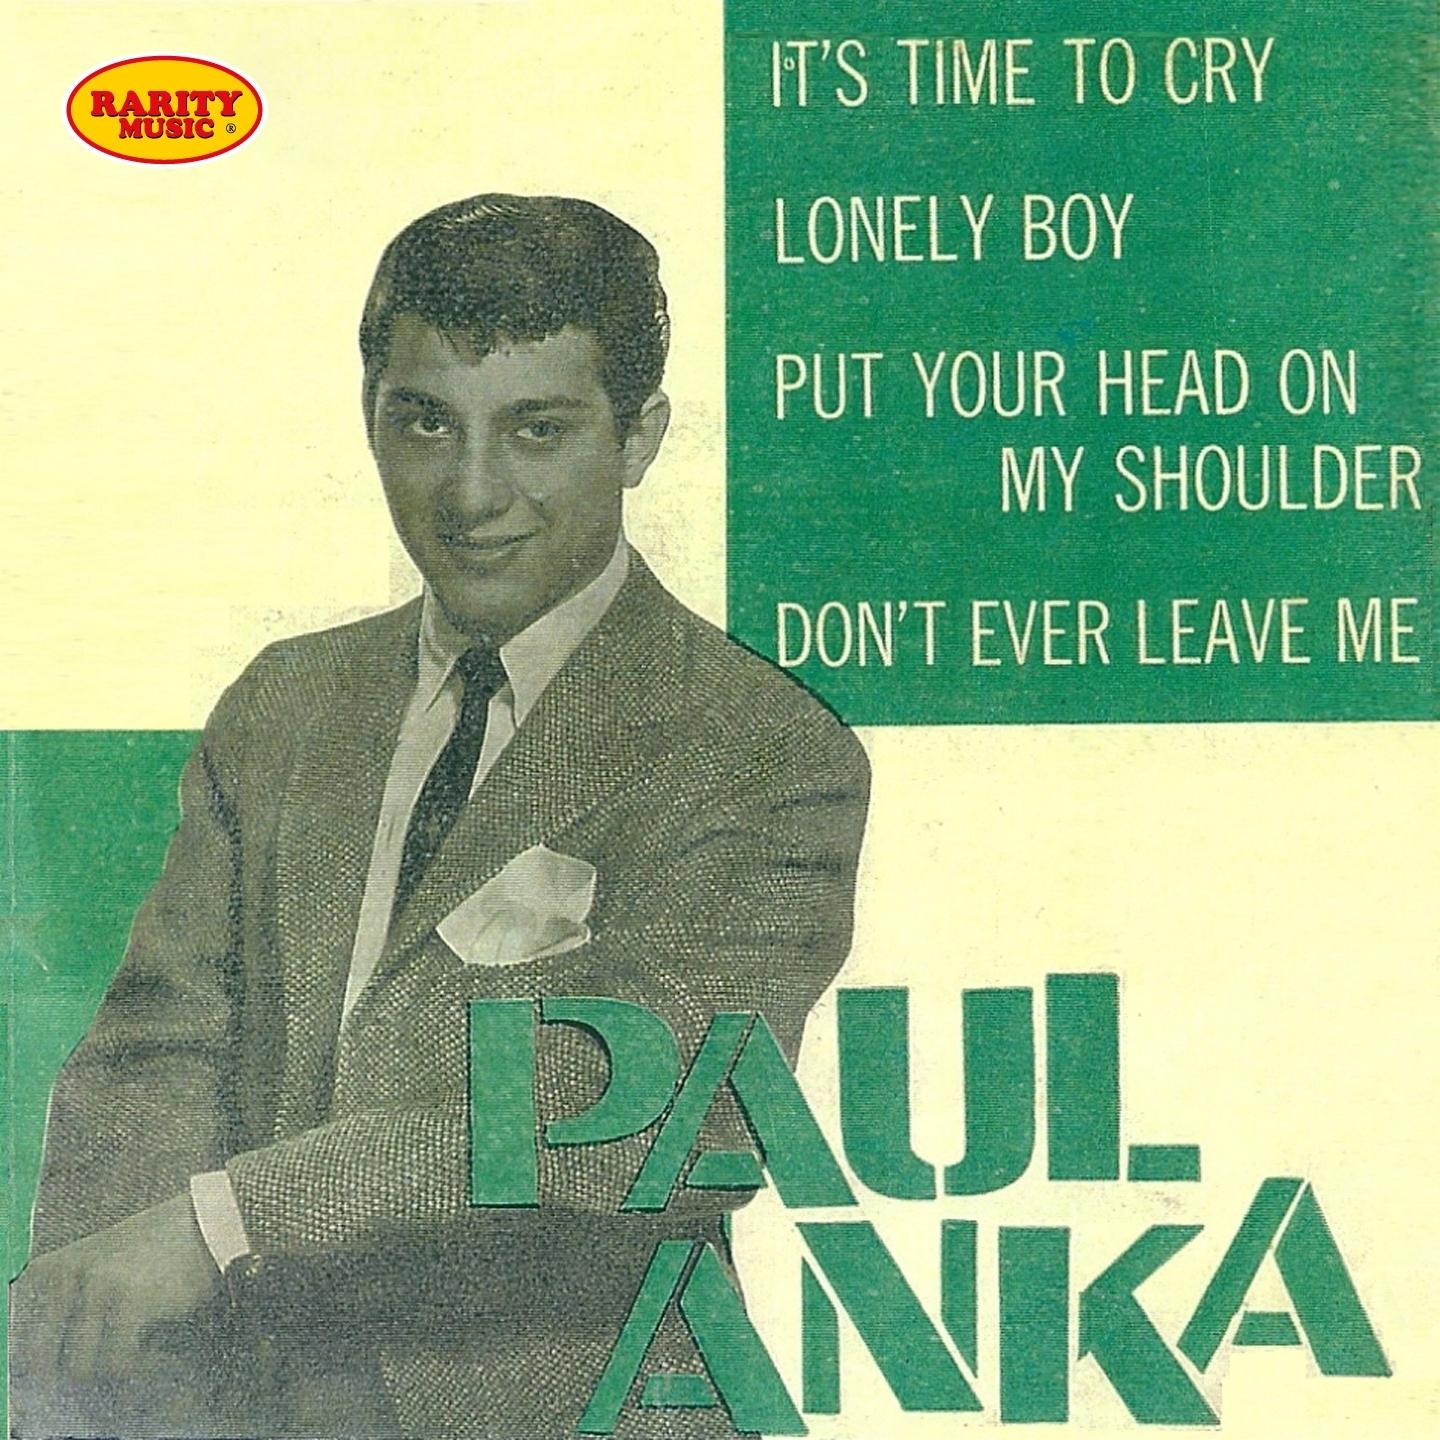 Paul Anka: Rarity Music Pop, Vol. 124专辑